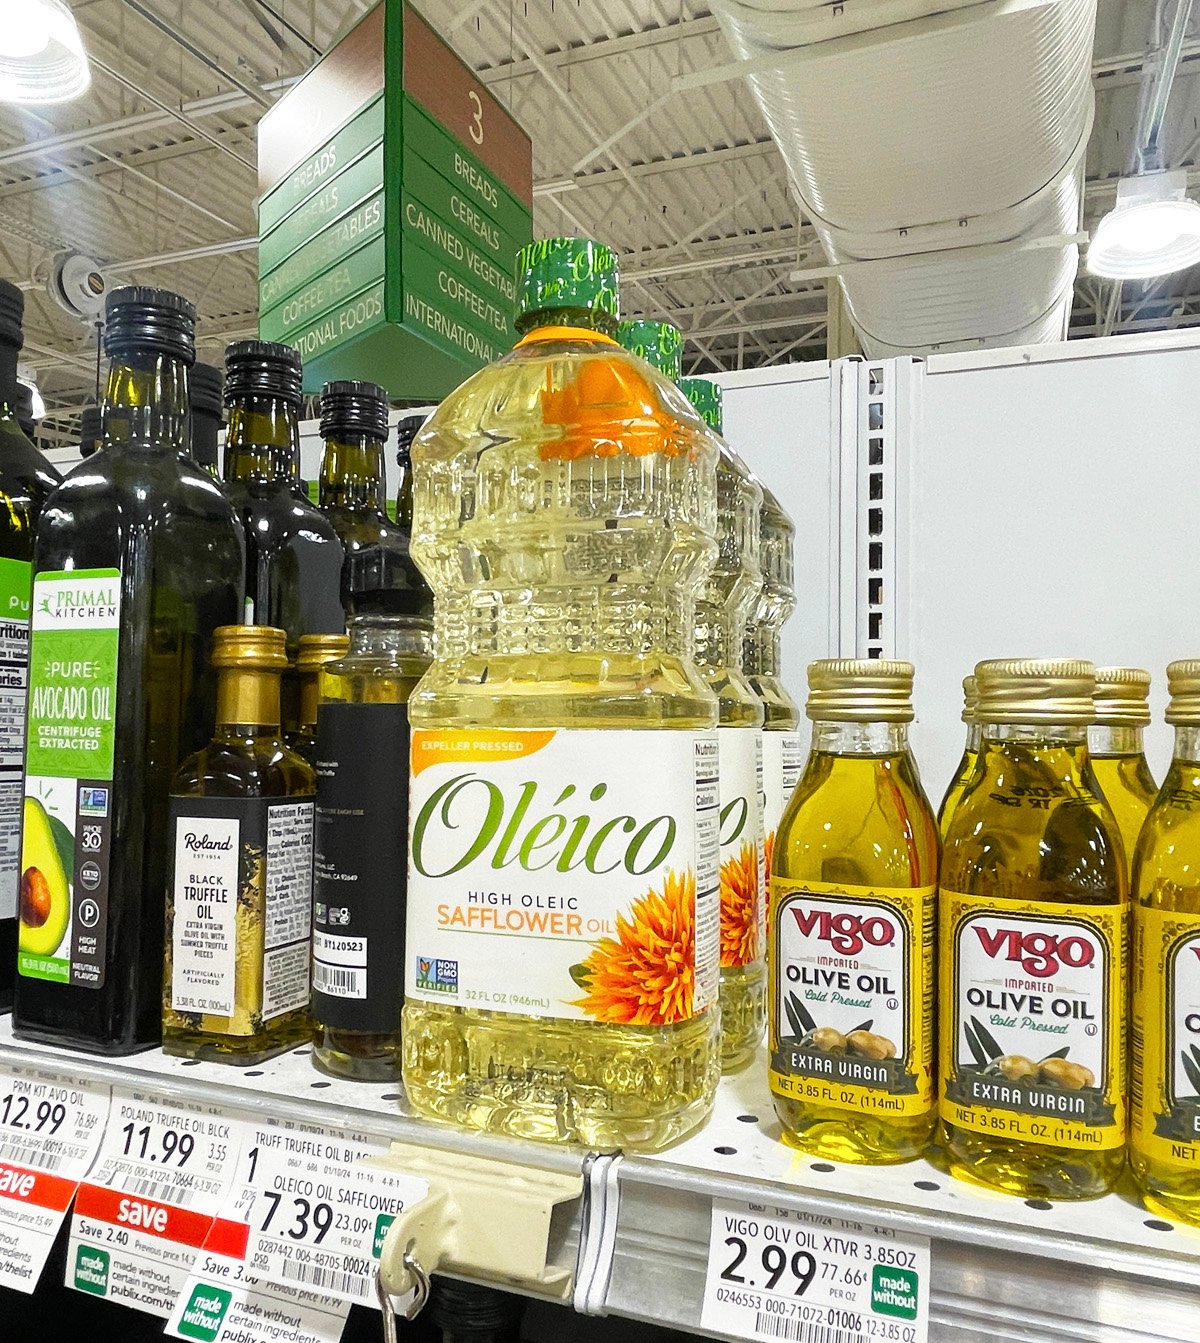 Publix grocery aisle showing vegetable oils including Oleico Safflower oil.